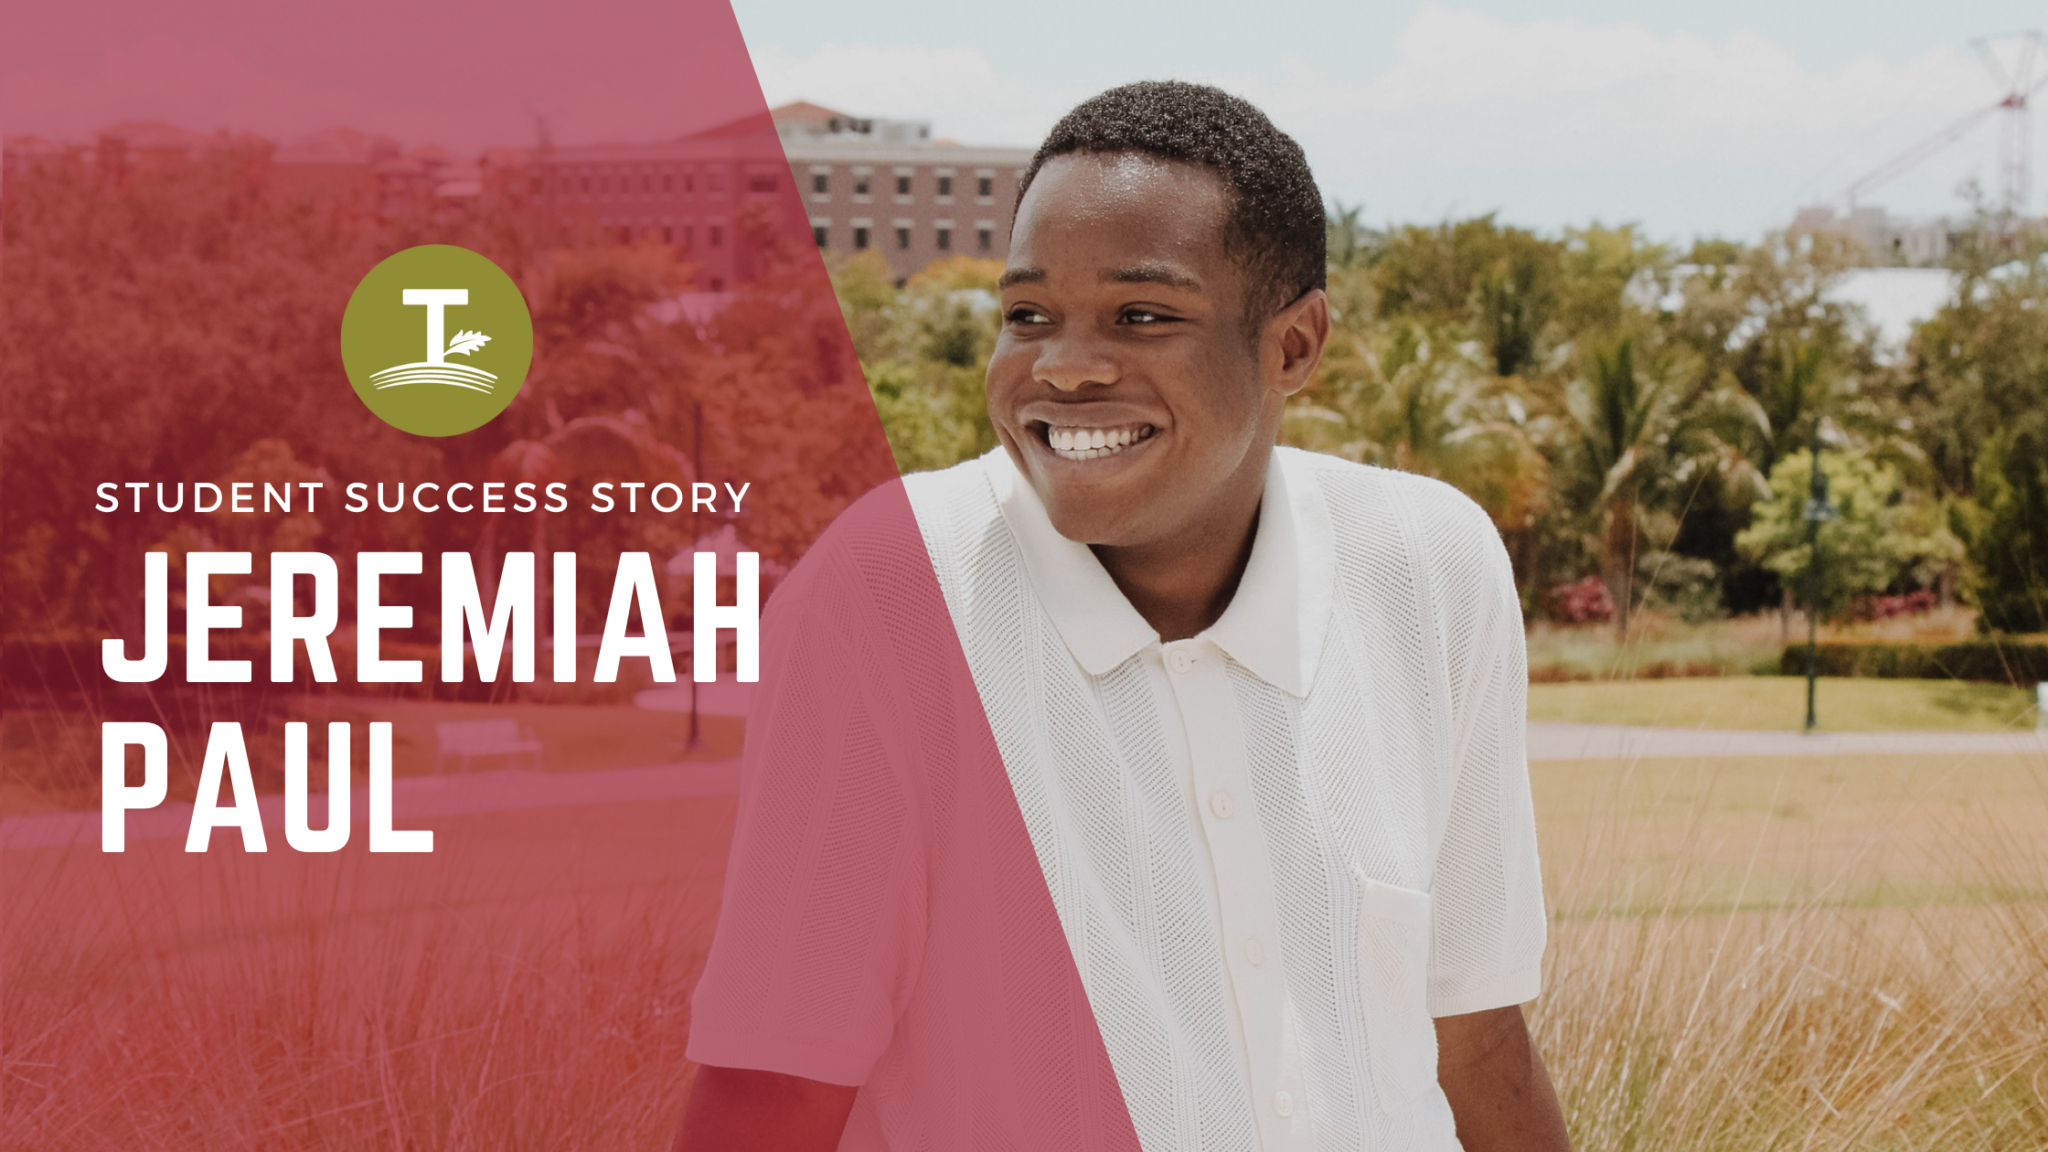 Student Success Story: Jeremiah Paul